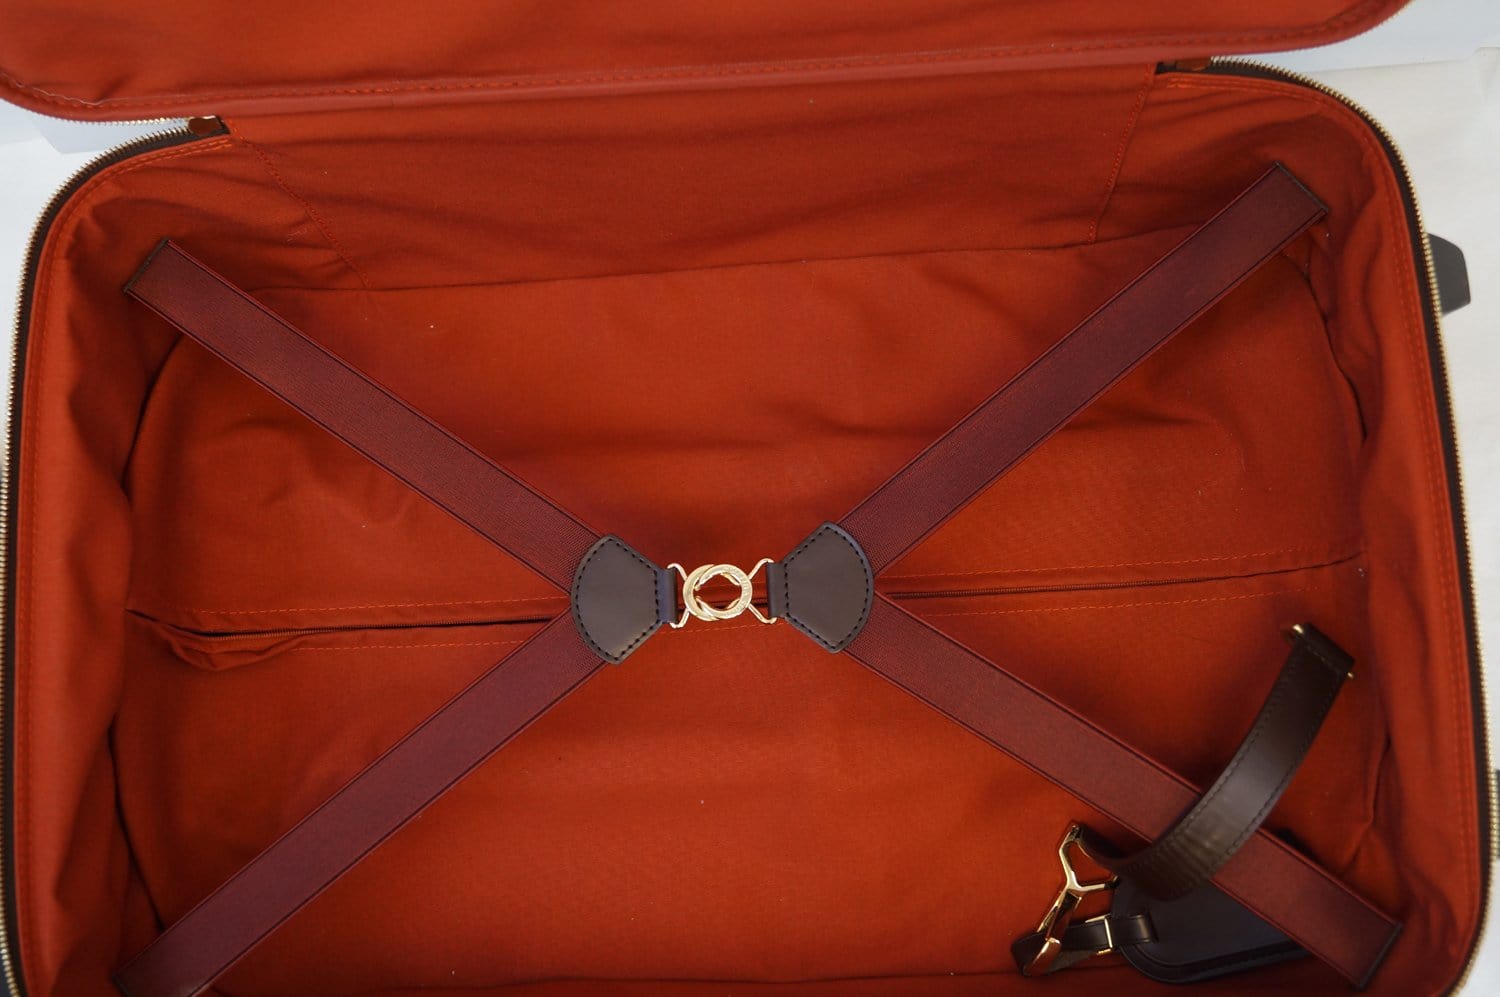 Louis Vuitton 55 Damier Ebene Carry On Luggage Travel Bag